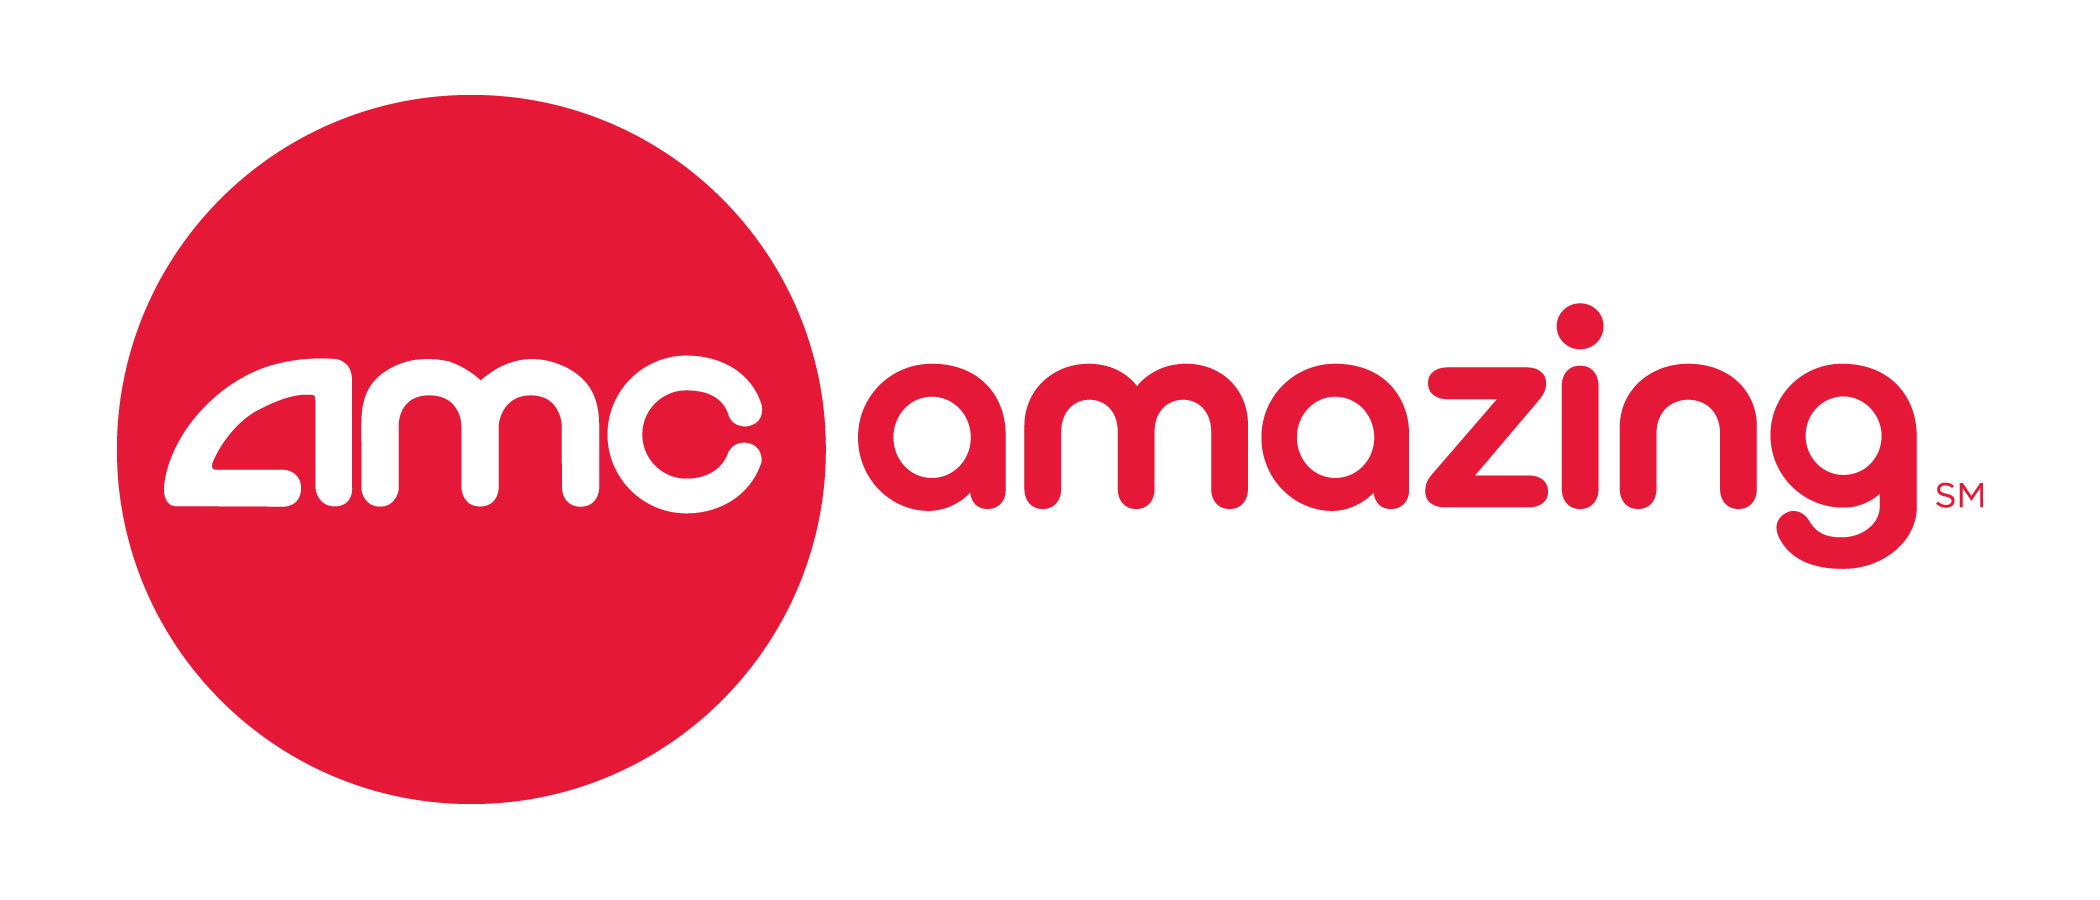 Amc theaters Logos